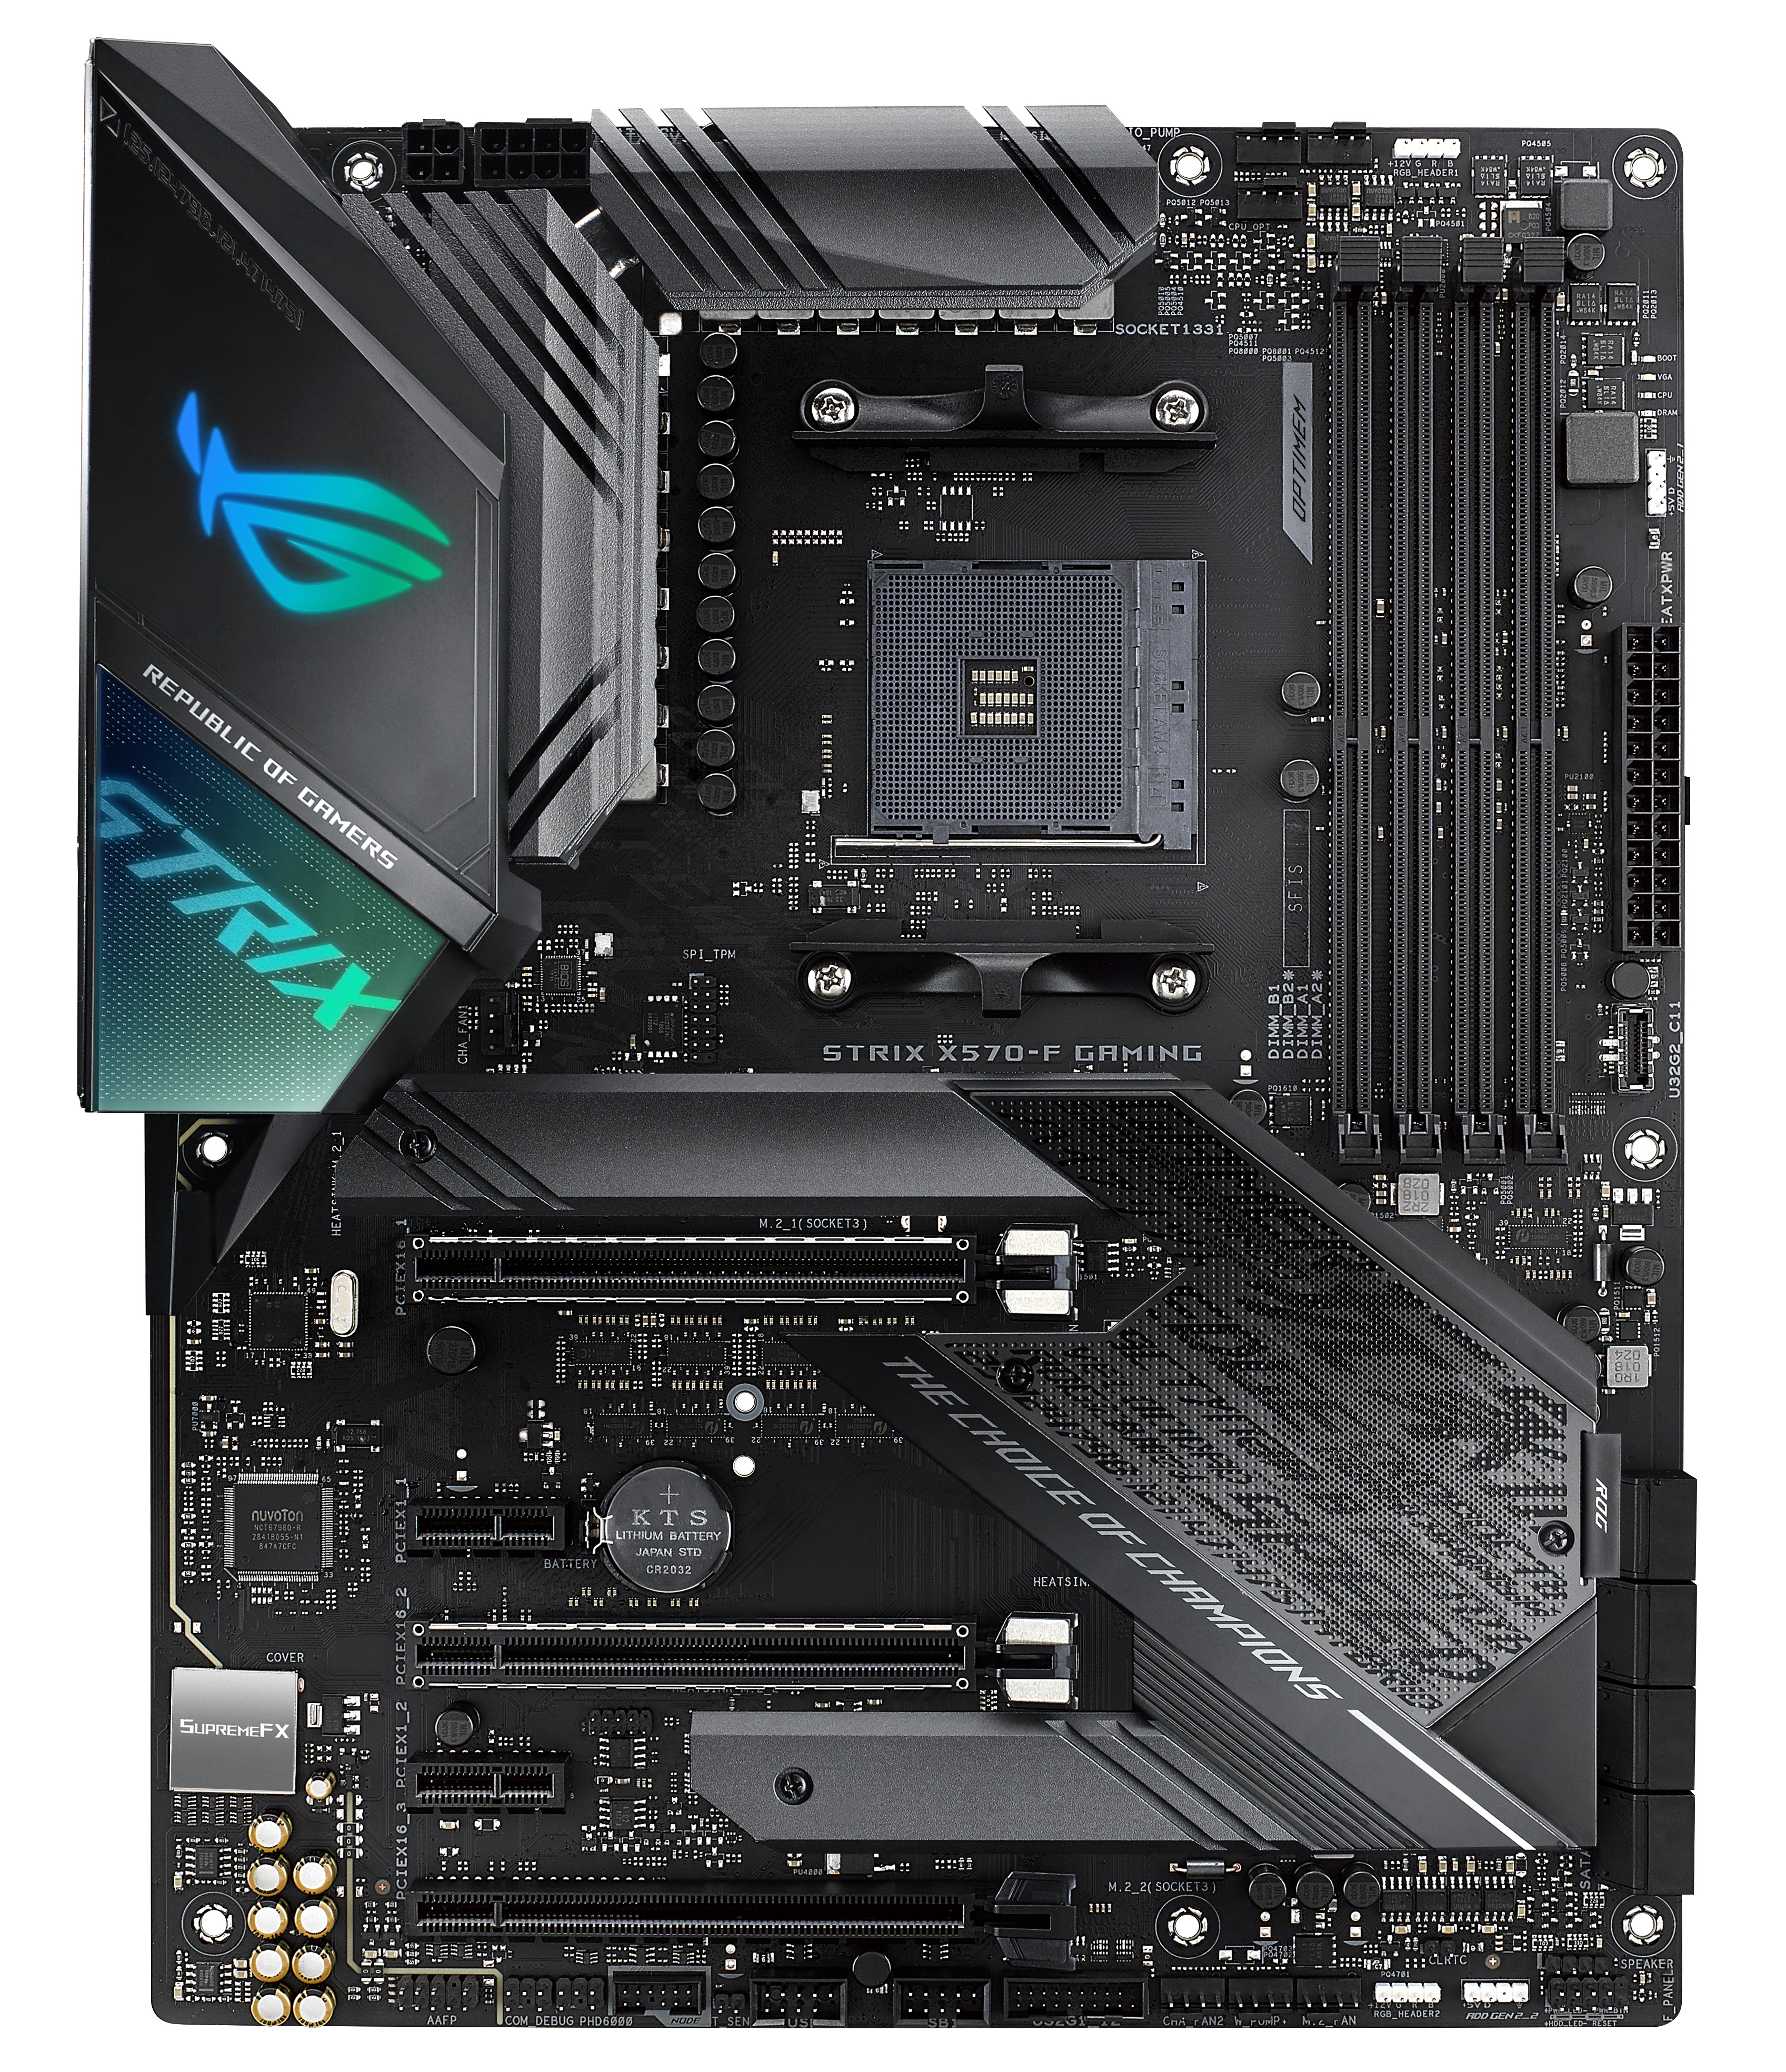 ASUS ROG Strix X570-F Gaming - The AMD 